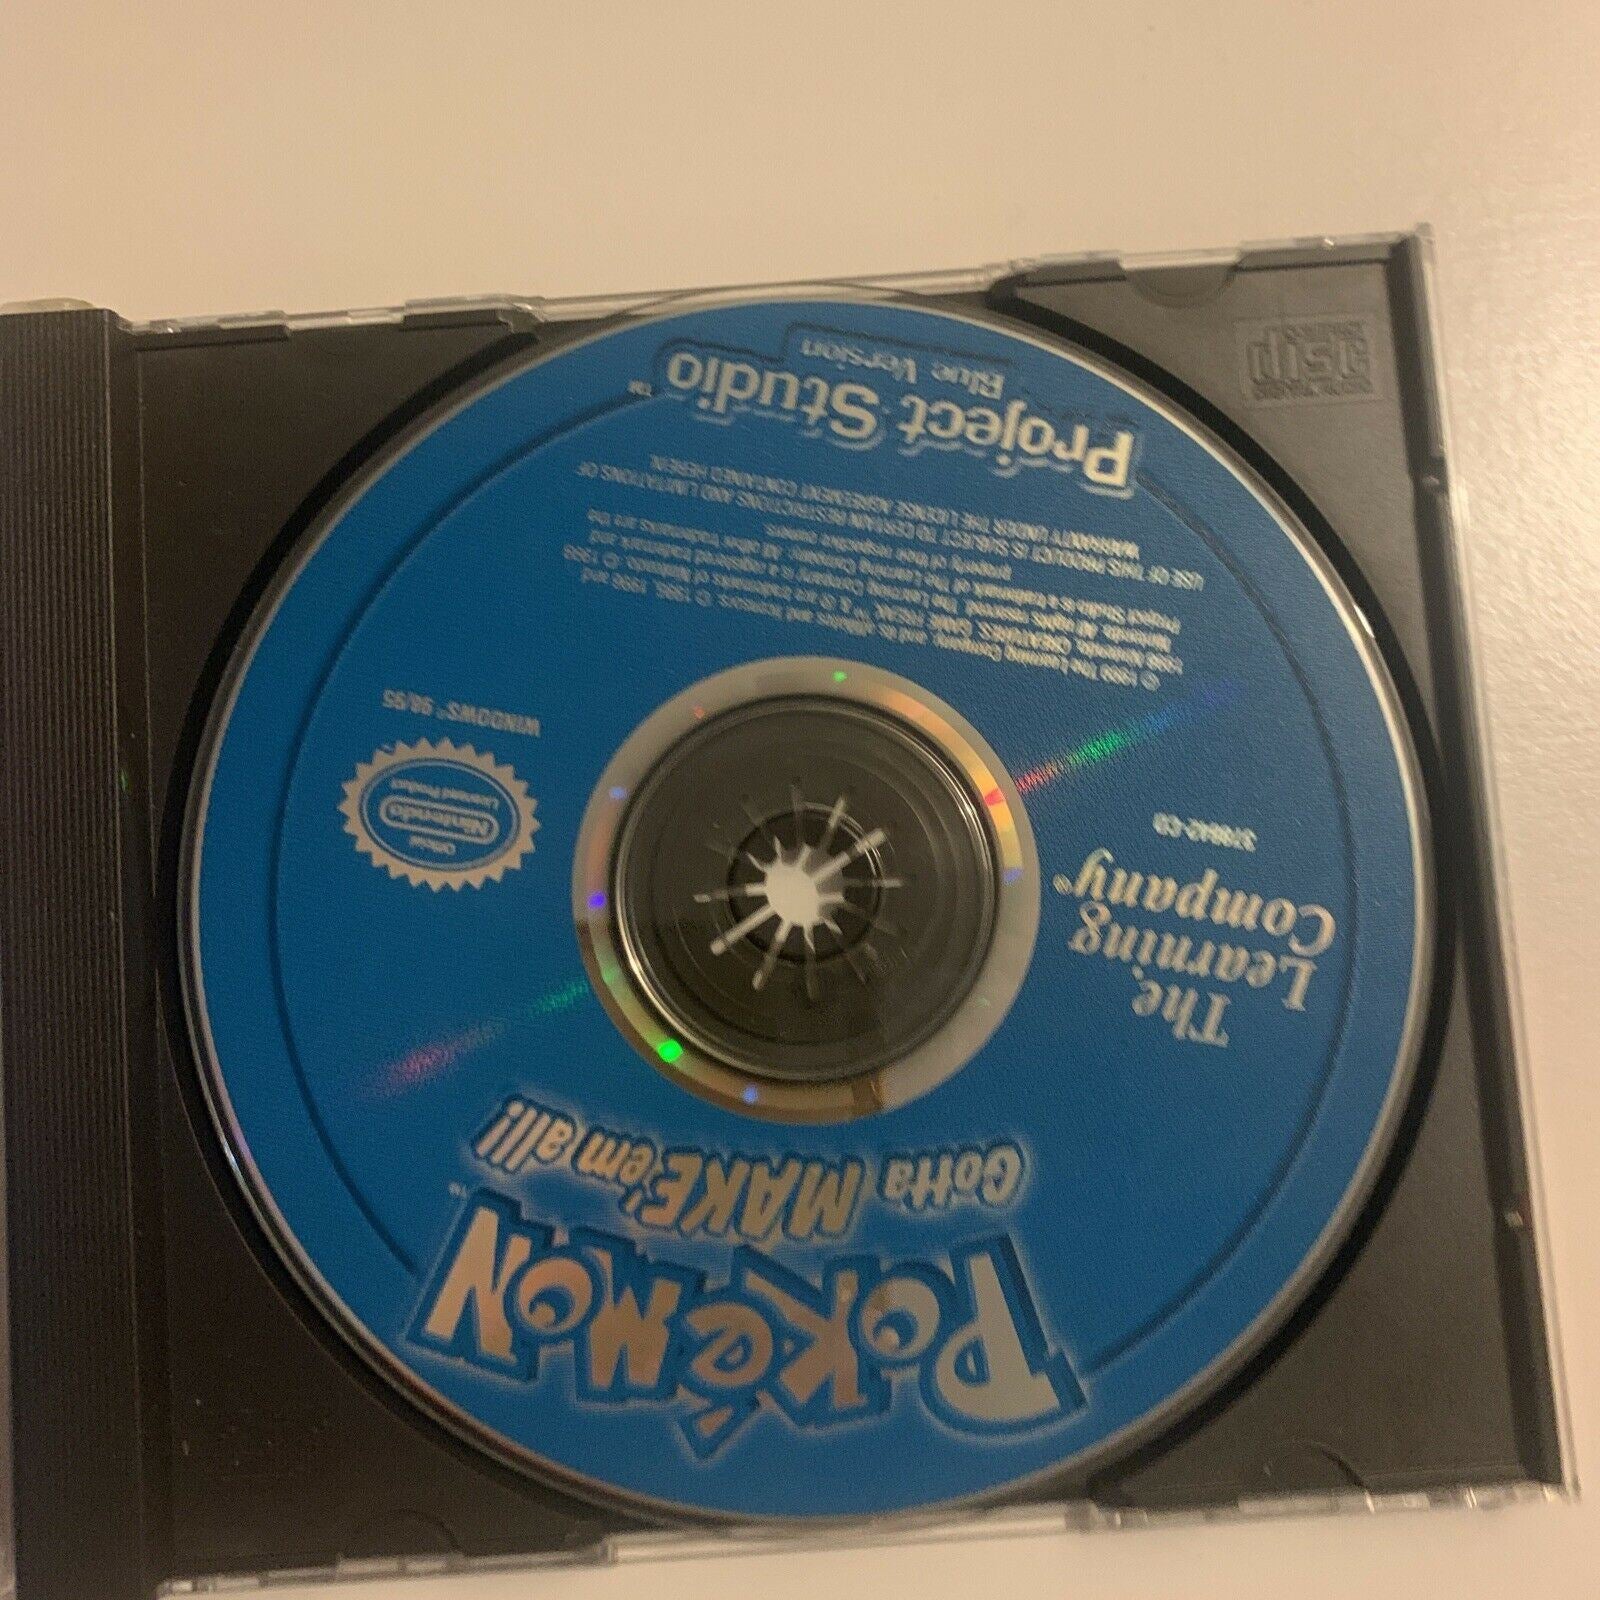 Pokemon Project Studio Red Version CD-ROM - Gotta Make 'Em All! (2001) NEW